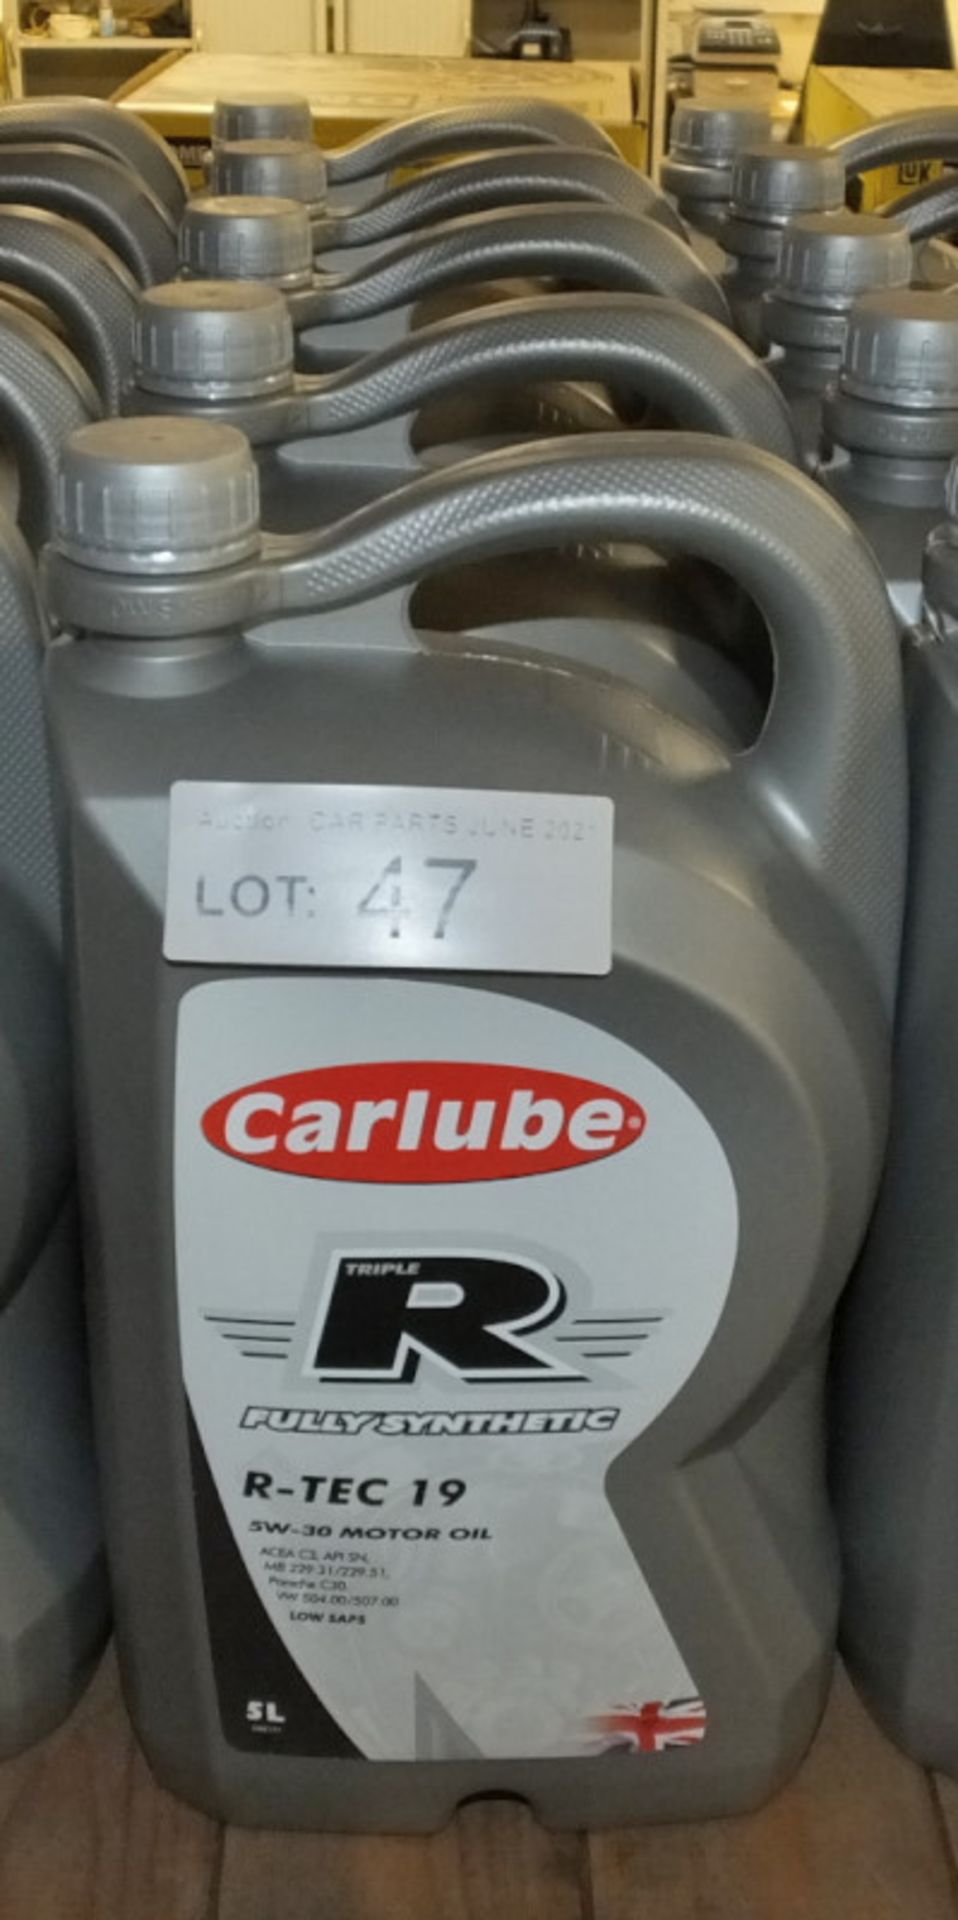 5x Carlube Triple R Fully Synthetic R-TEC 19 5W-30 Motor Oil - 5L